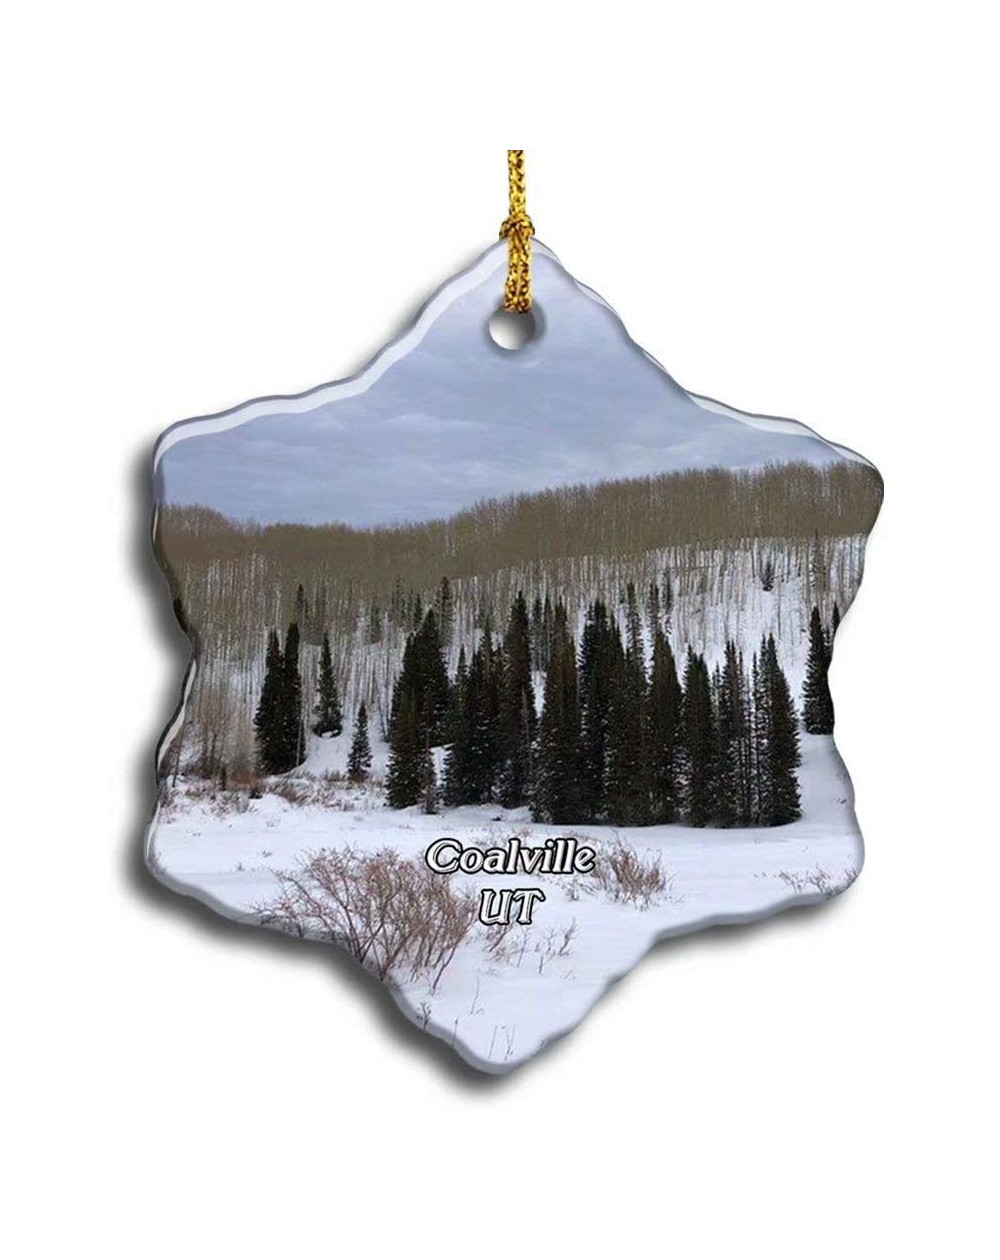 Ornaments Coalville Snowmobiling Utah USA America Christmas Ceramic Ornament Xmas Tree Decor Souvenirs Double Sided Snowflake...